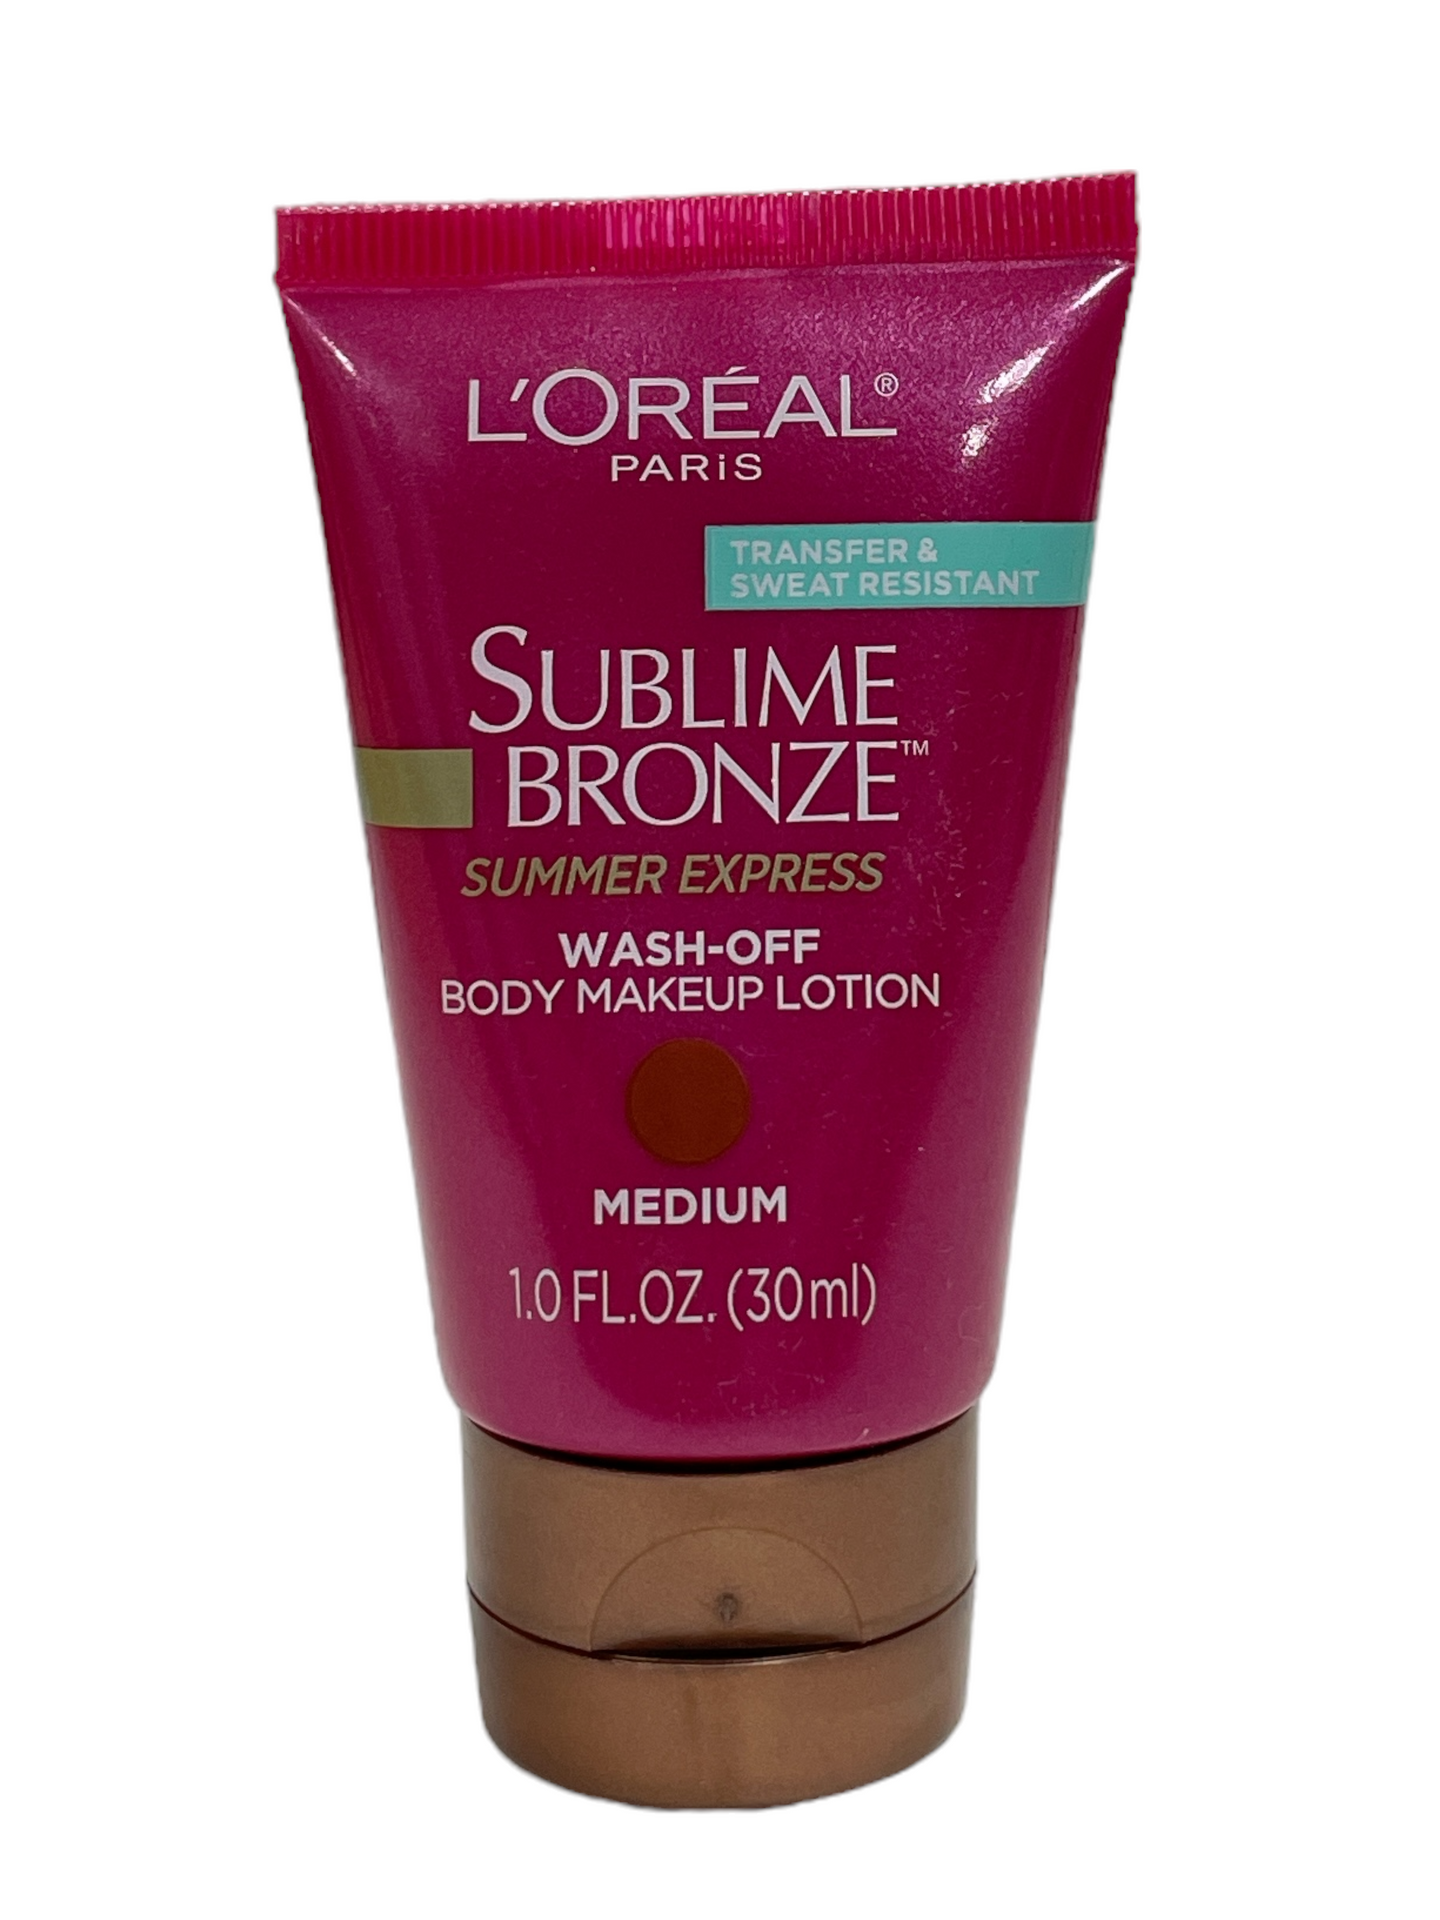 L'Oreal Sublime Bronze Wash-Off Body Makeup Lotion (Medium) (1.0fl.oz / 30ml)